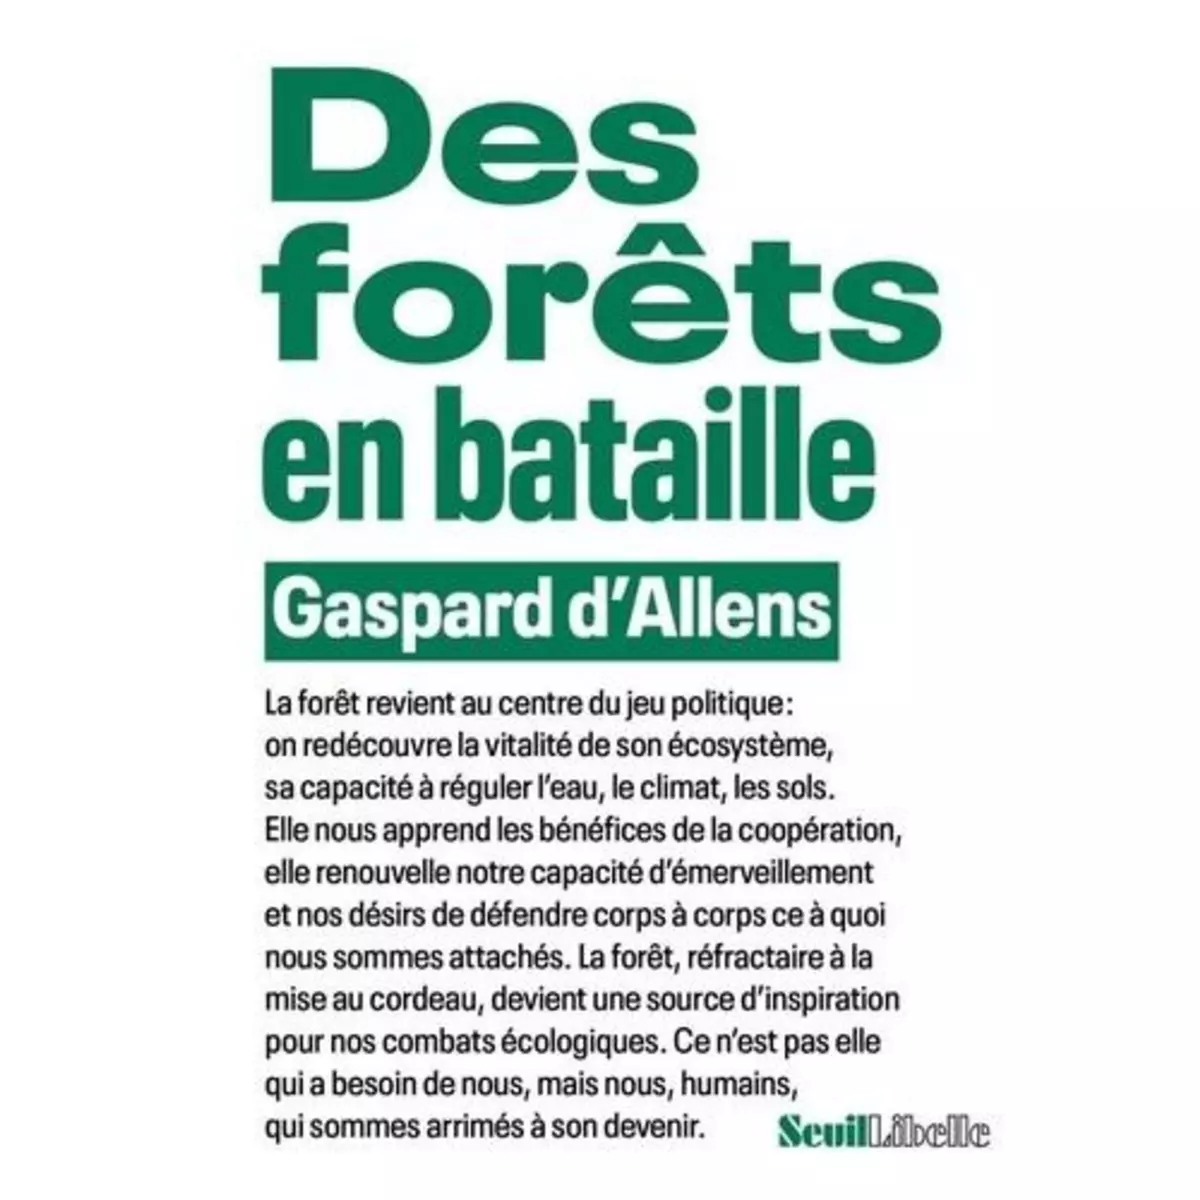  DES FORETS EN BATAILLE, Allens Gaspard d'